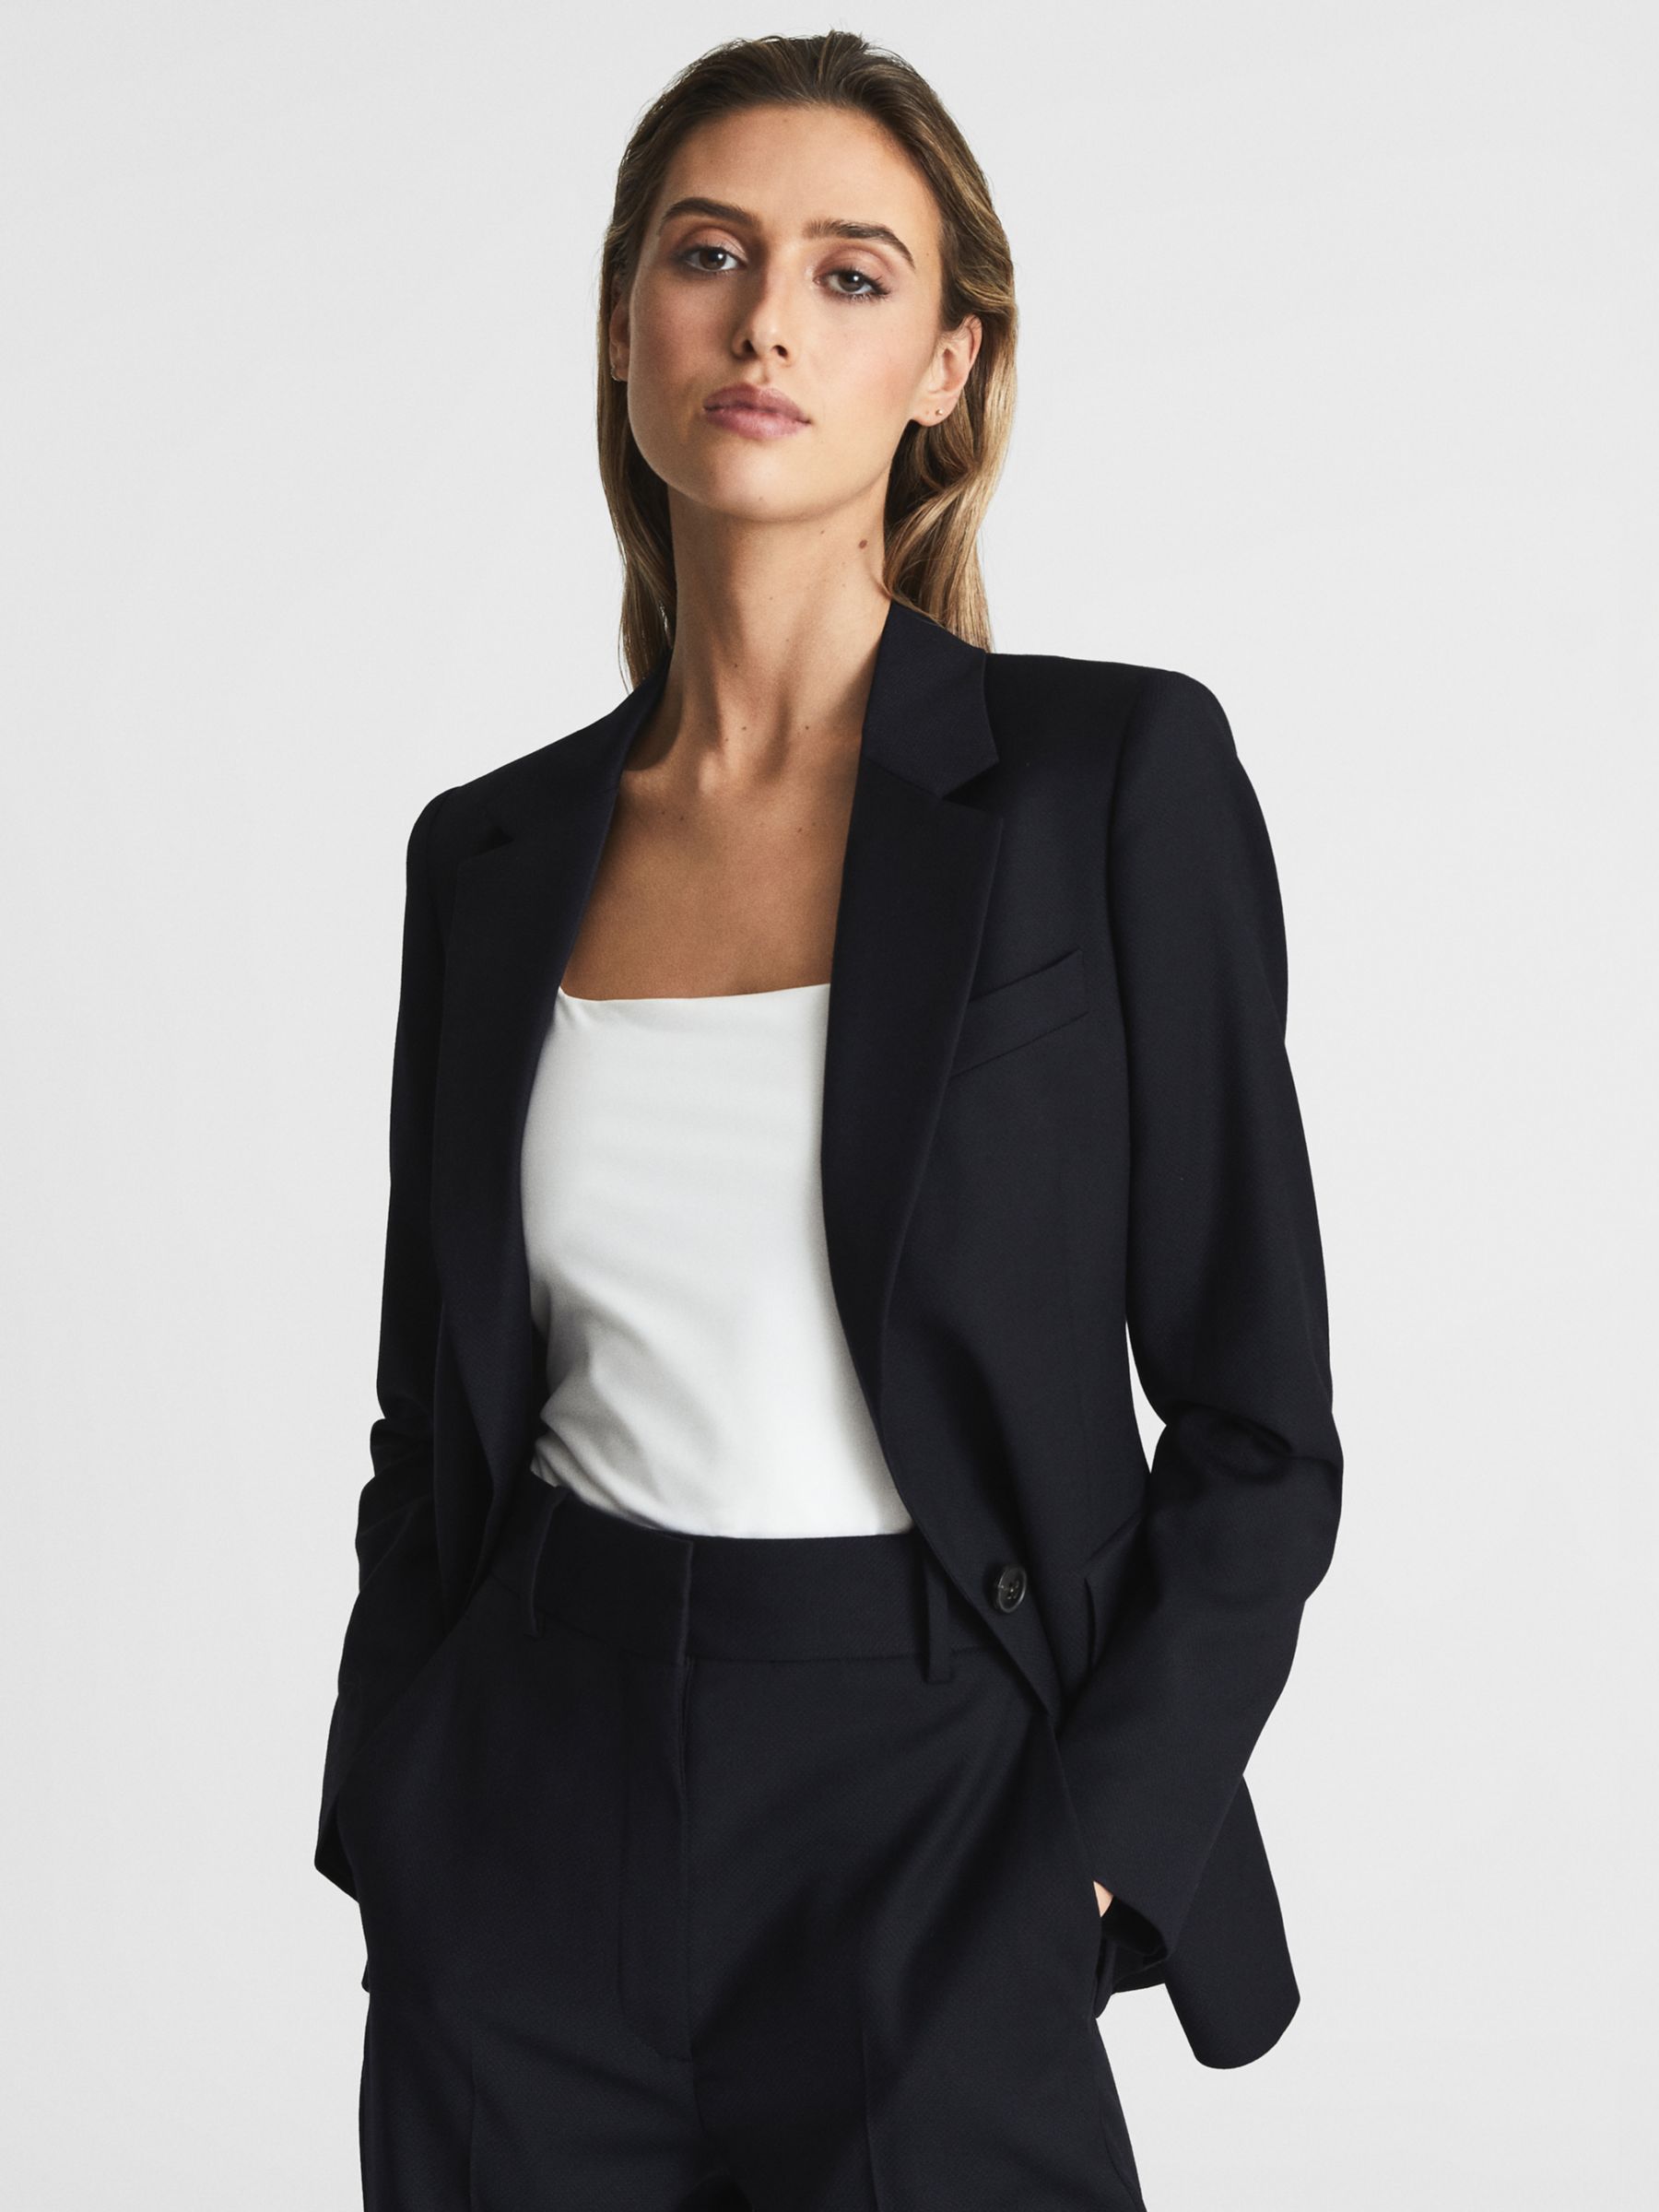 Women's Suits  Designer Ladies Suits - Reiss